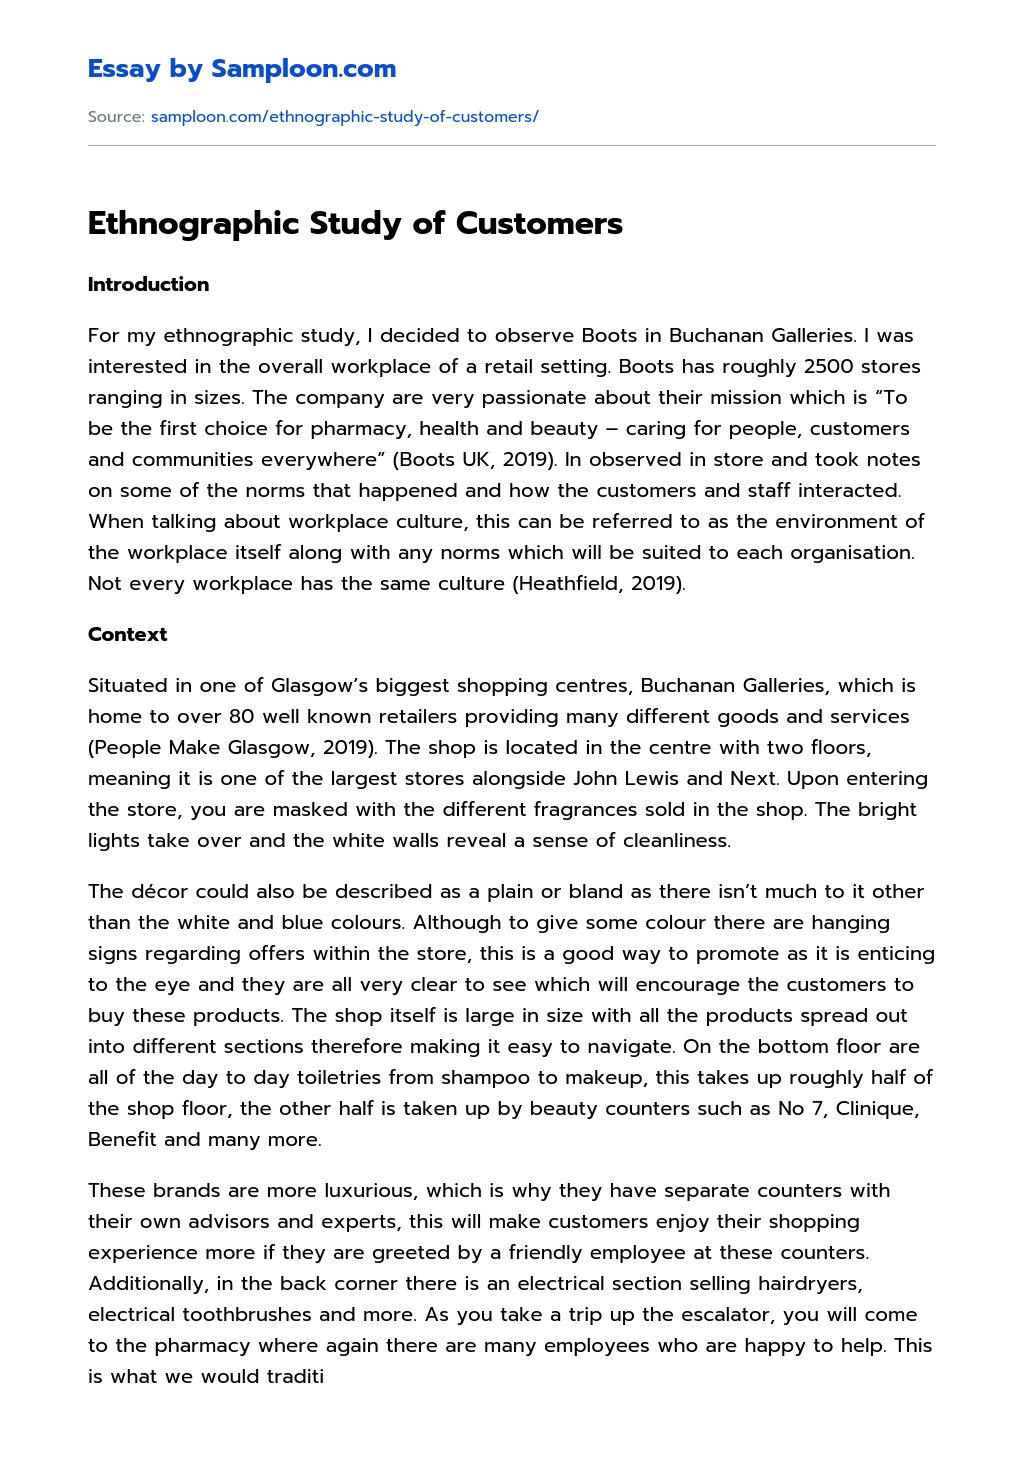 Ethnographic Study of Customers essay